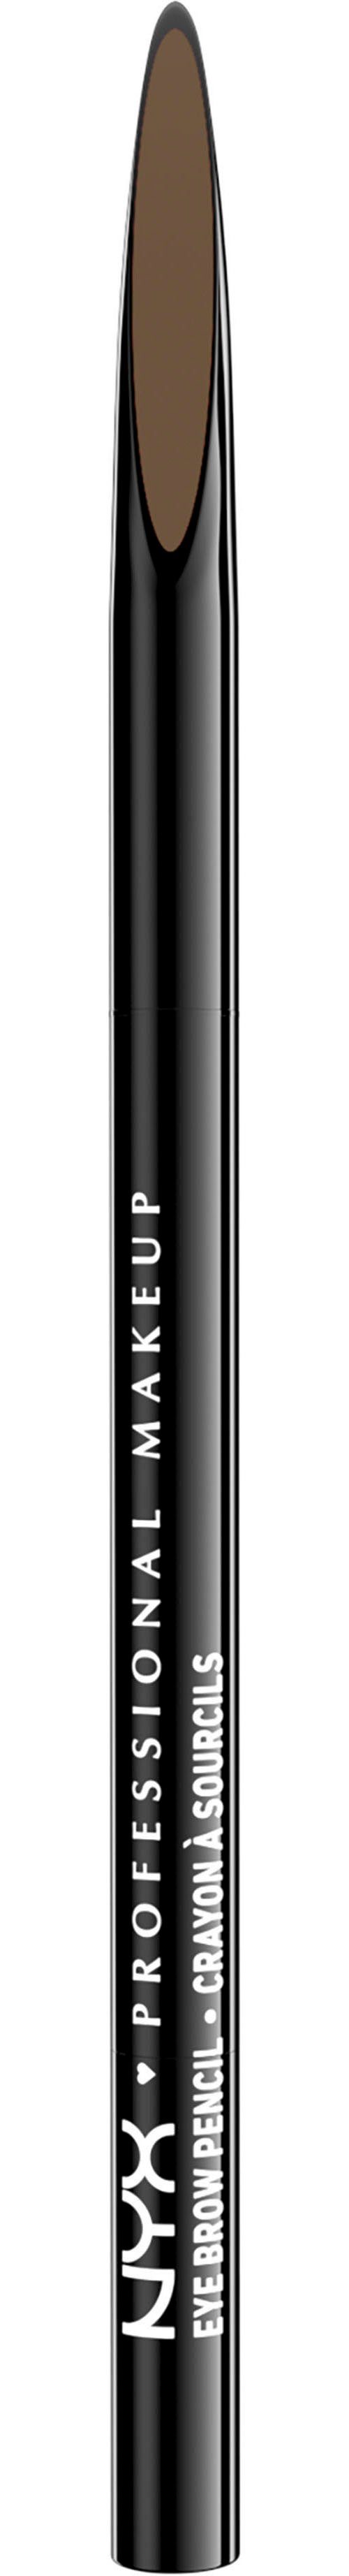 NYX Augenbrauen-Stift Professional Makeup Precision Brow Pencil taupe